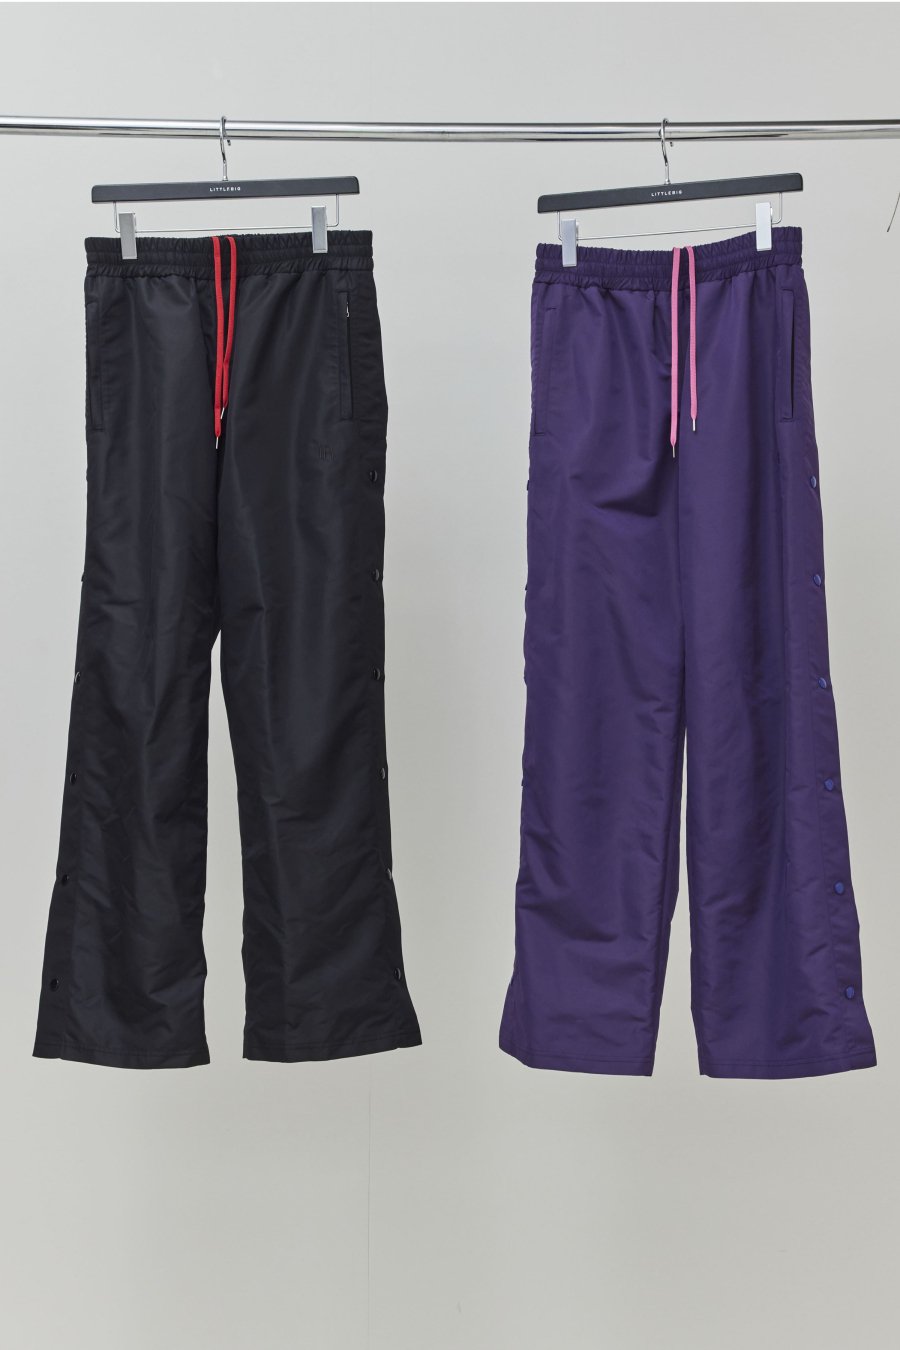 LITTLEBIG  22aw Nylon Track Pants(Purple)<img class='new_mark_img2' src='https://img.shop-pro.jp/img/new/icons15.gif' style='border:none;display:inline;margin:0px;padding:0px;width:auto;' />